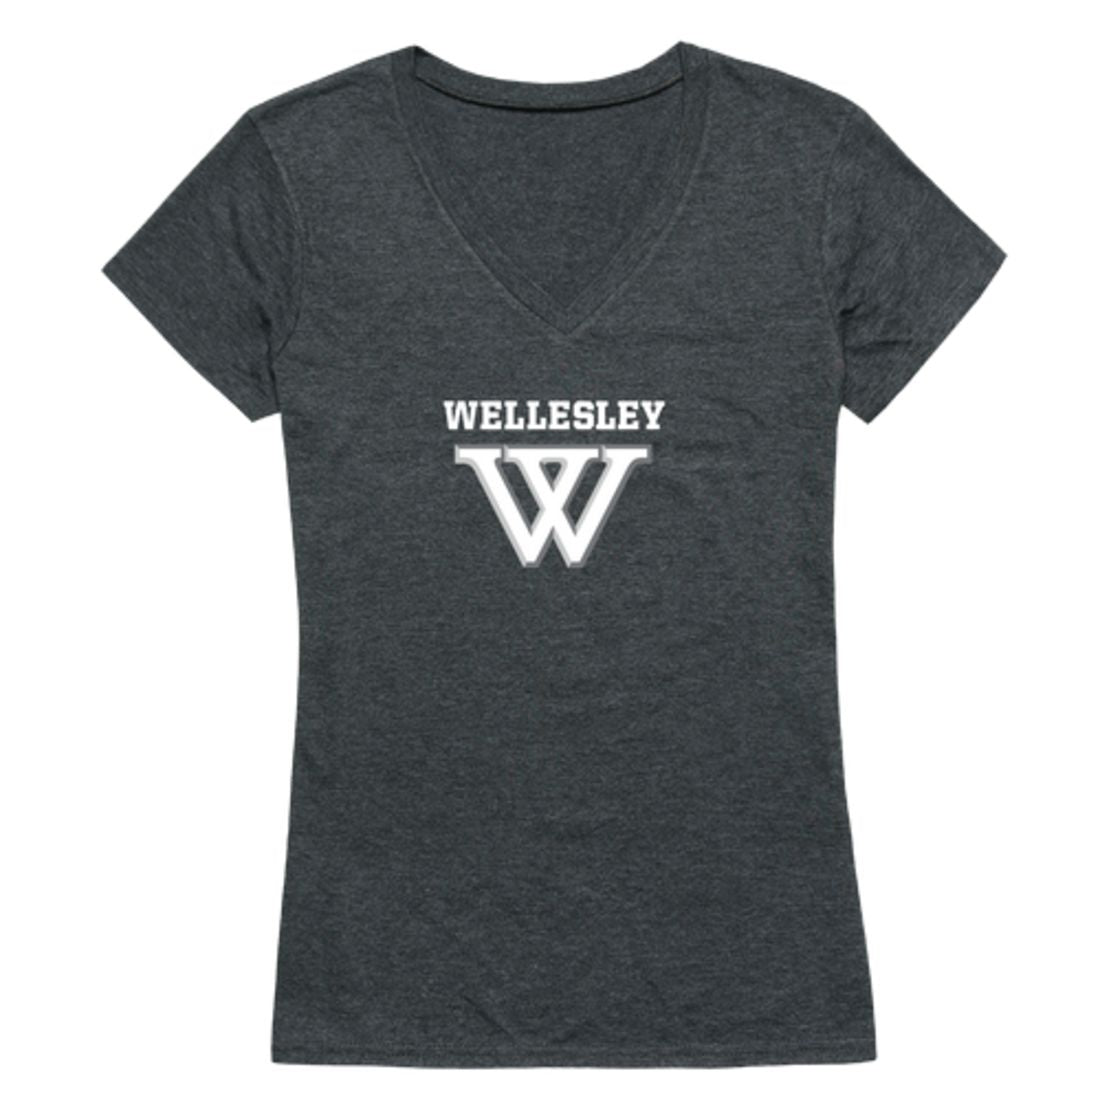 Wellesley College Blue Womens Cinder T-Shirt Tee